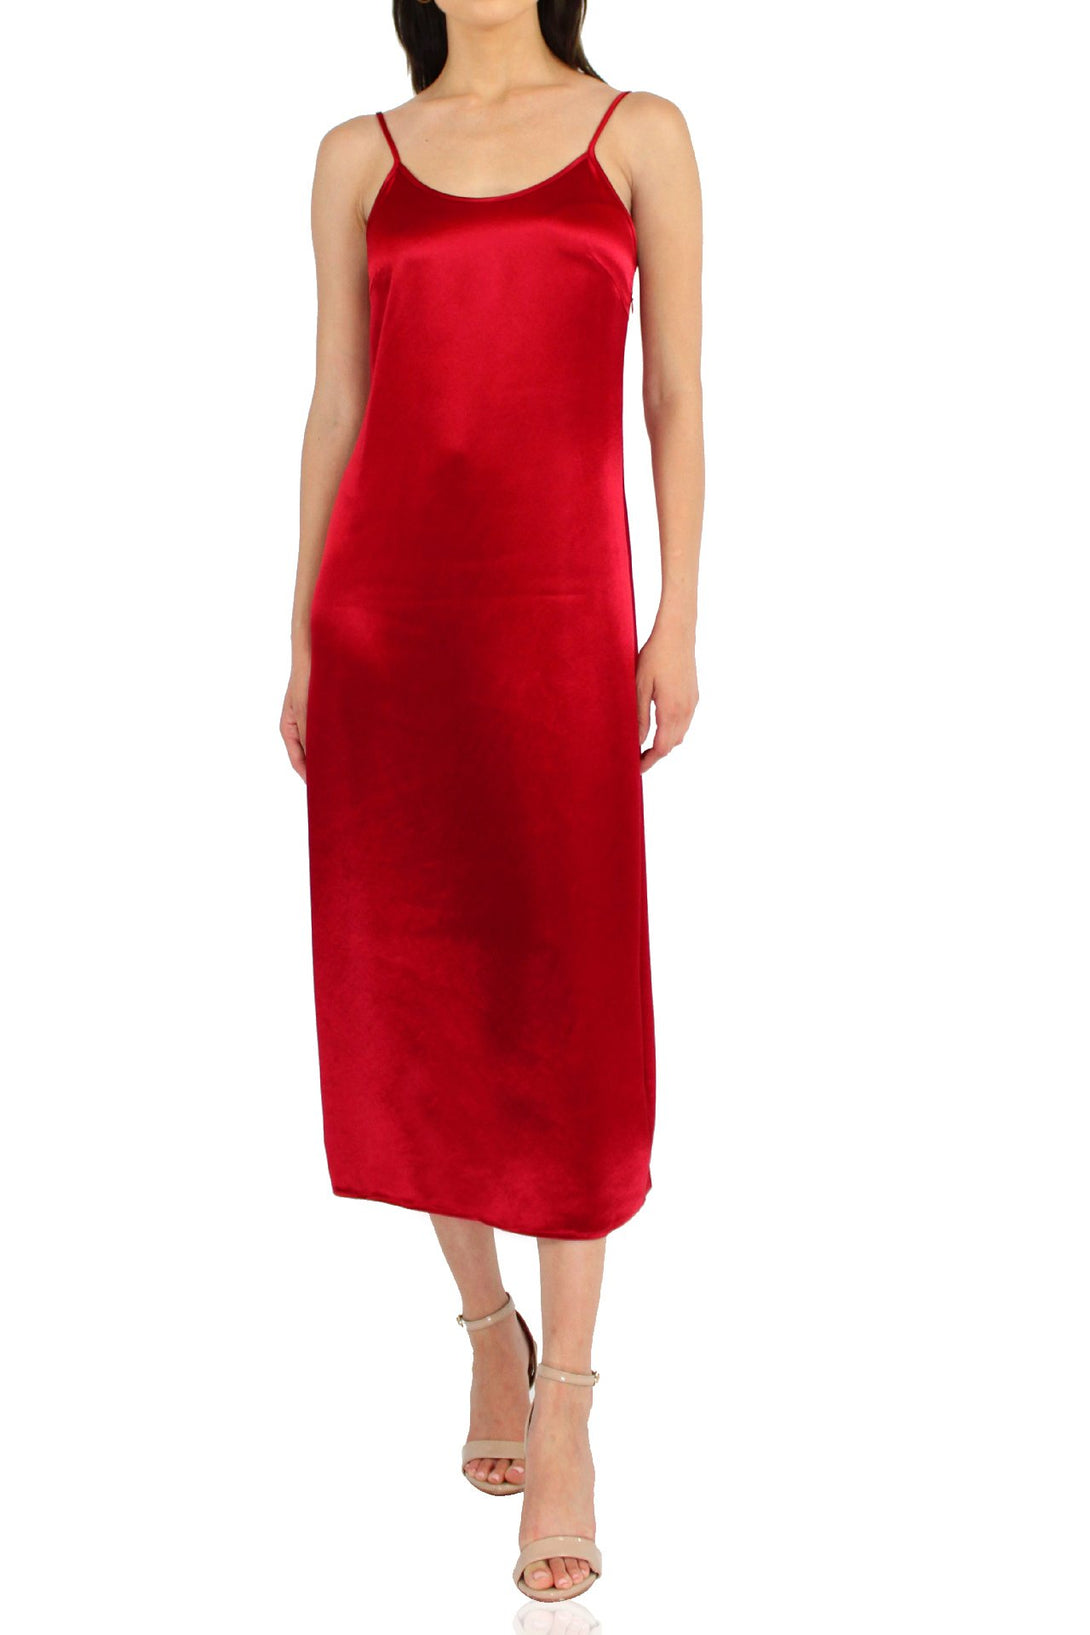 Womens-Designer-Red-Midi-Dress-By-Kyle-Richards